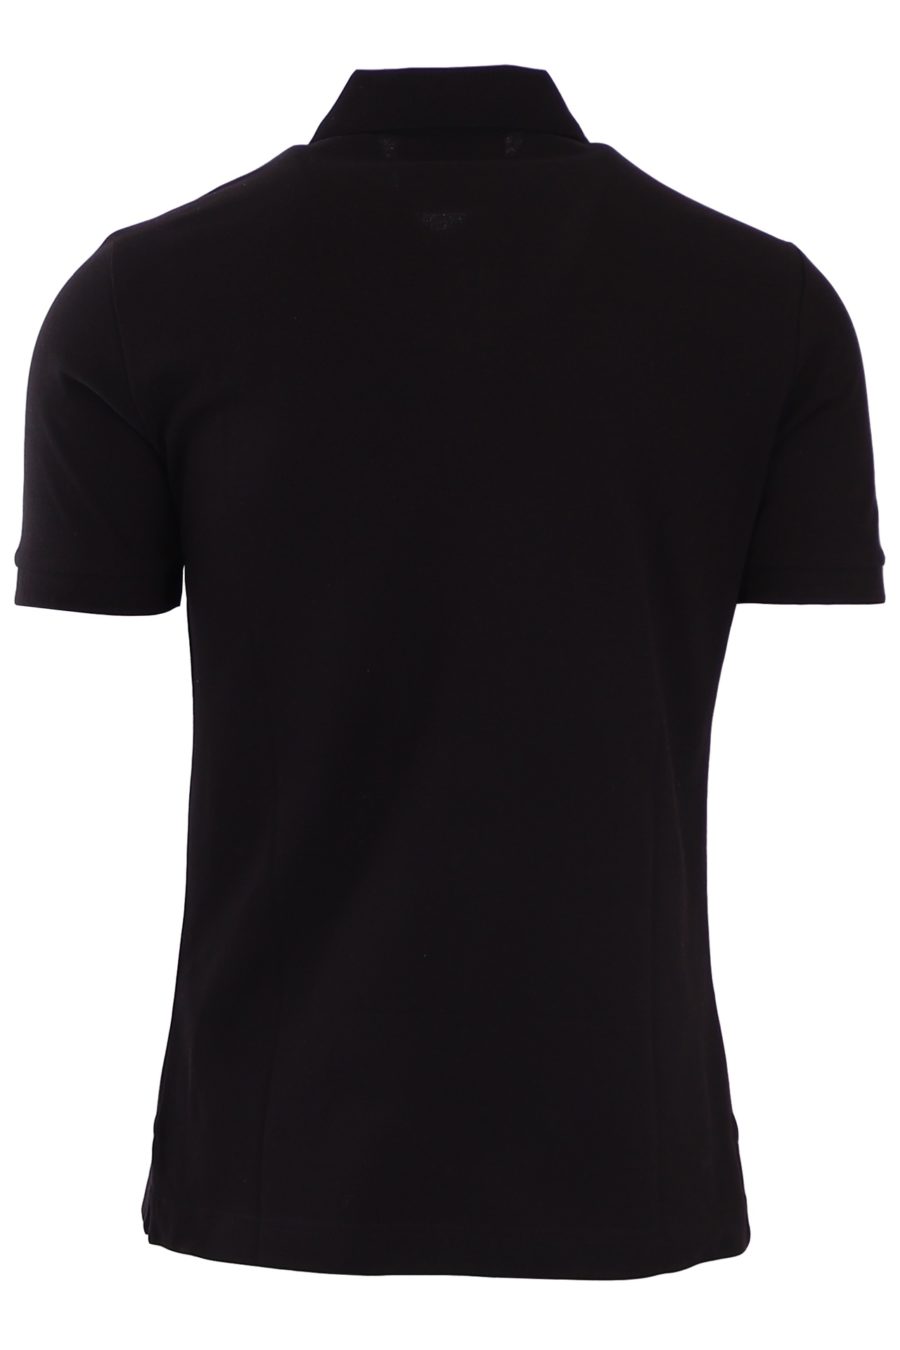 Polo Versace Jeans Couture negro con logo y texto blanco pequeño - 251e499b6b6f49e560a4f90701bc516b78c0c9ec